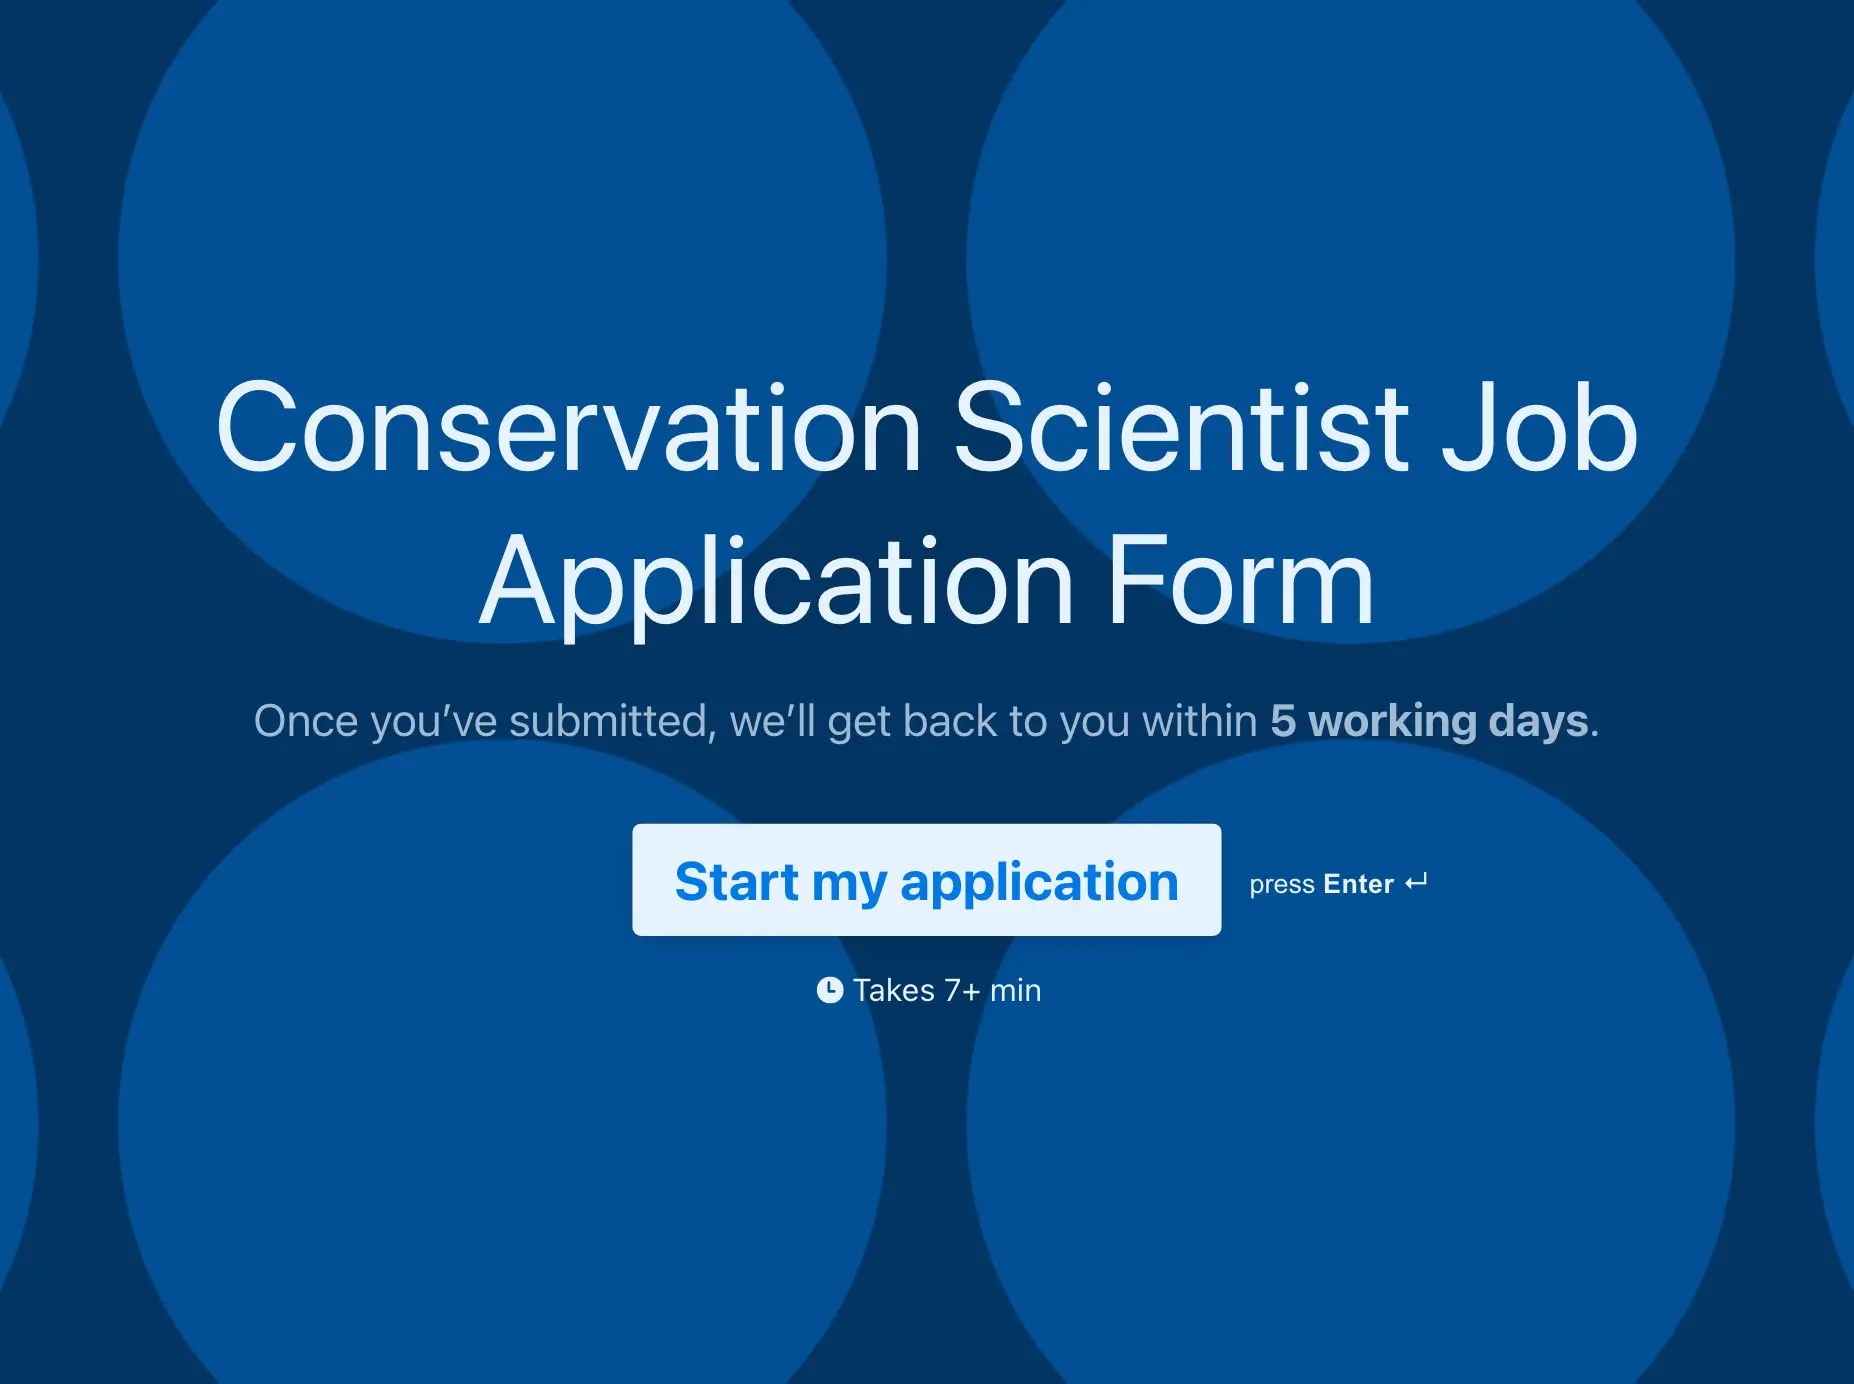 Conservation Scientist Job Application Form Template Hero